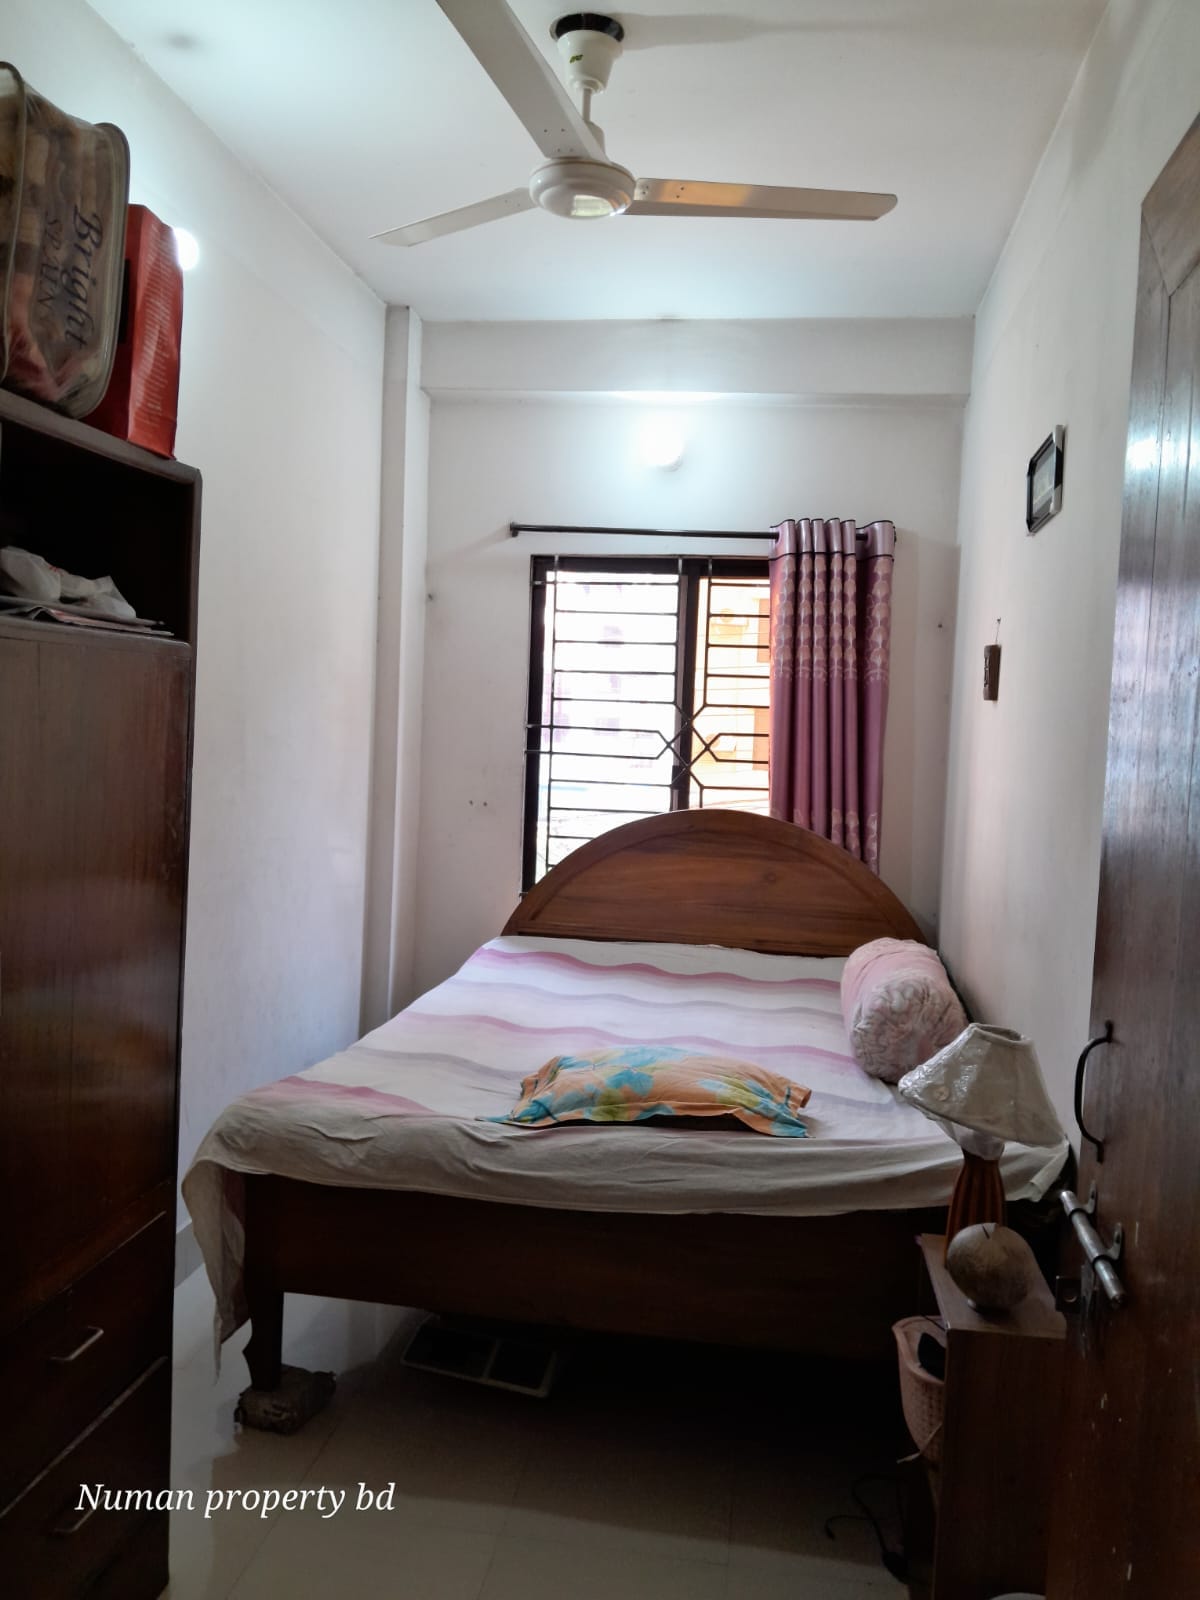 To-Let at Bashundhara R/A Small flat rent Family